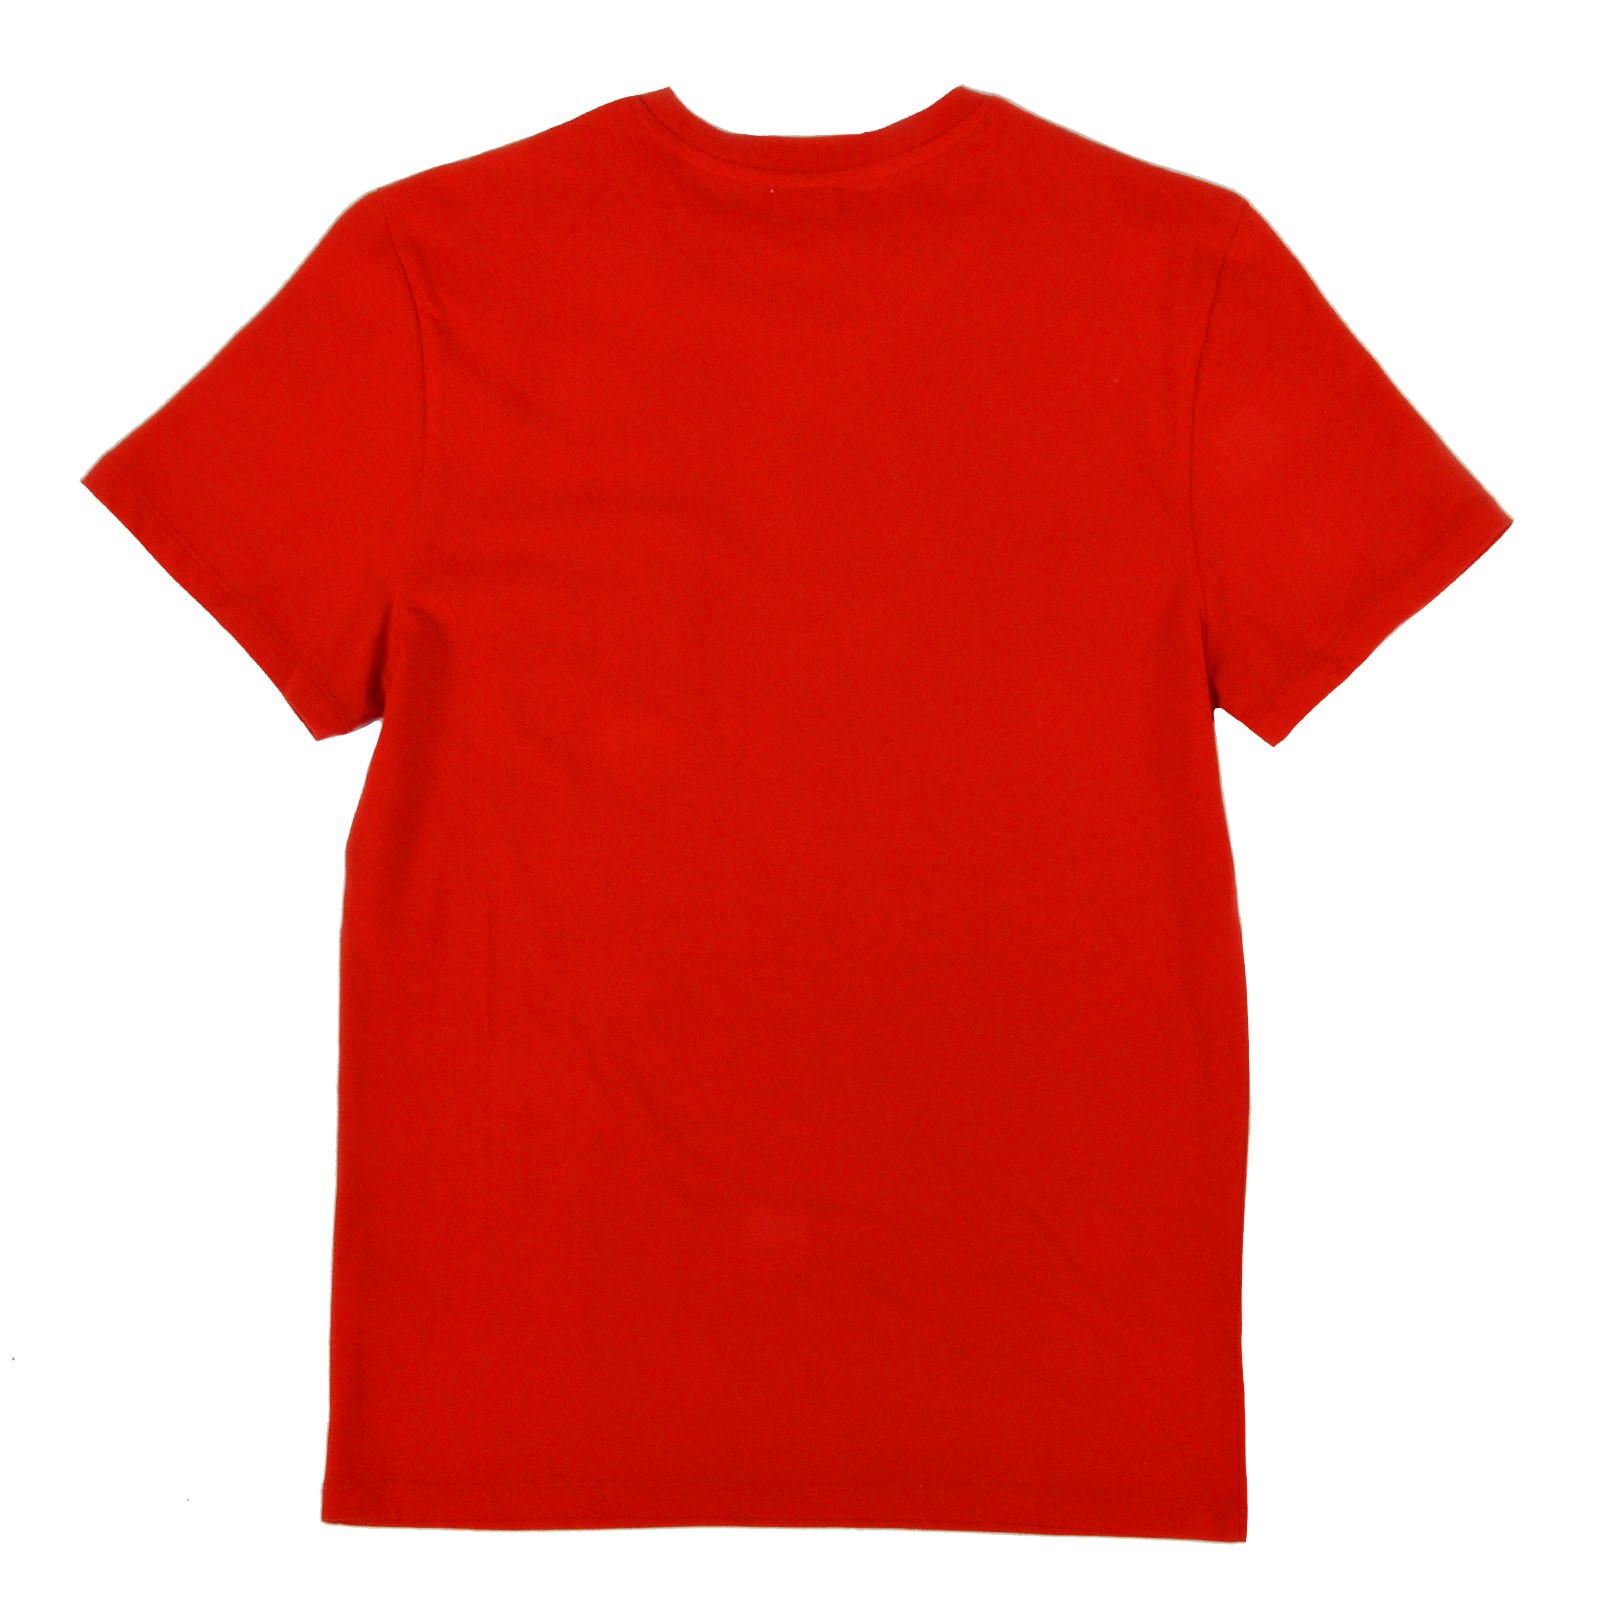 Red Shirt Template